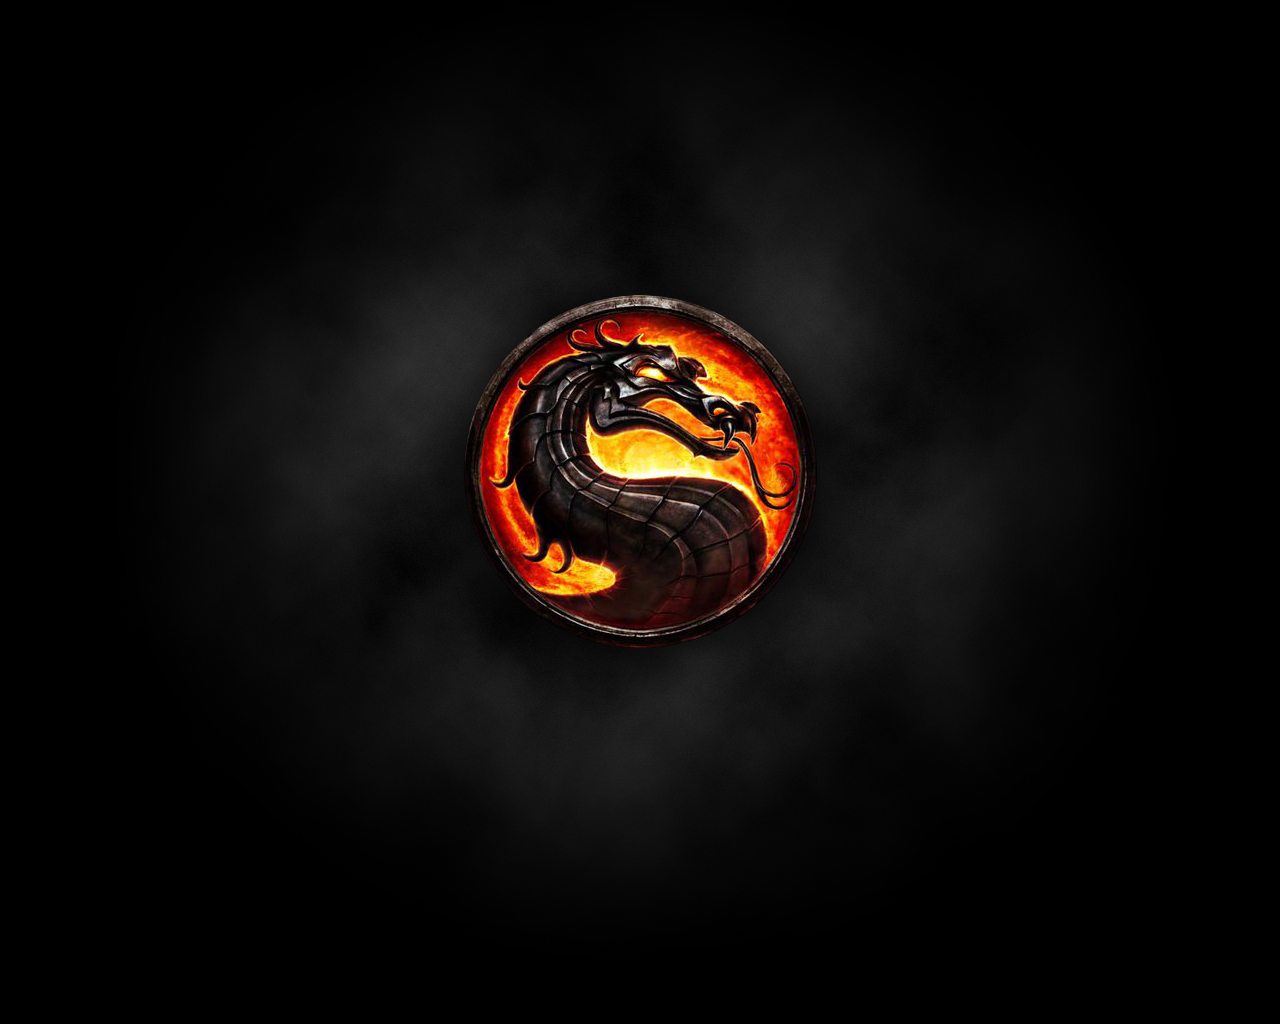 General 1280x1024 Mortal Kombat video games dragon black background logo video game art simple background